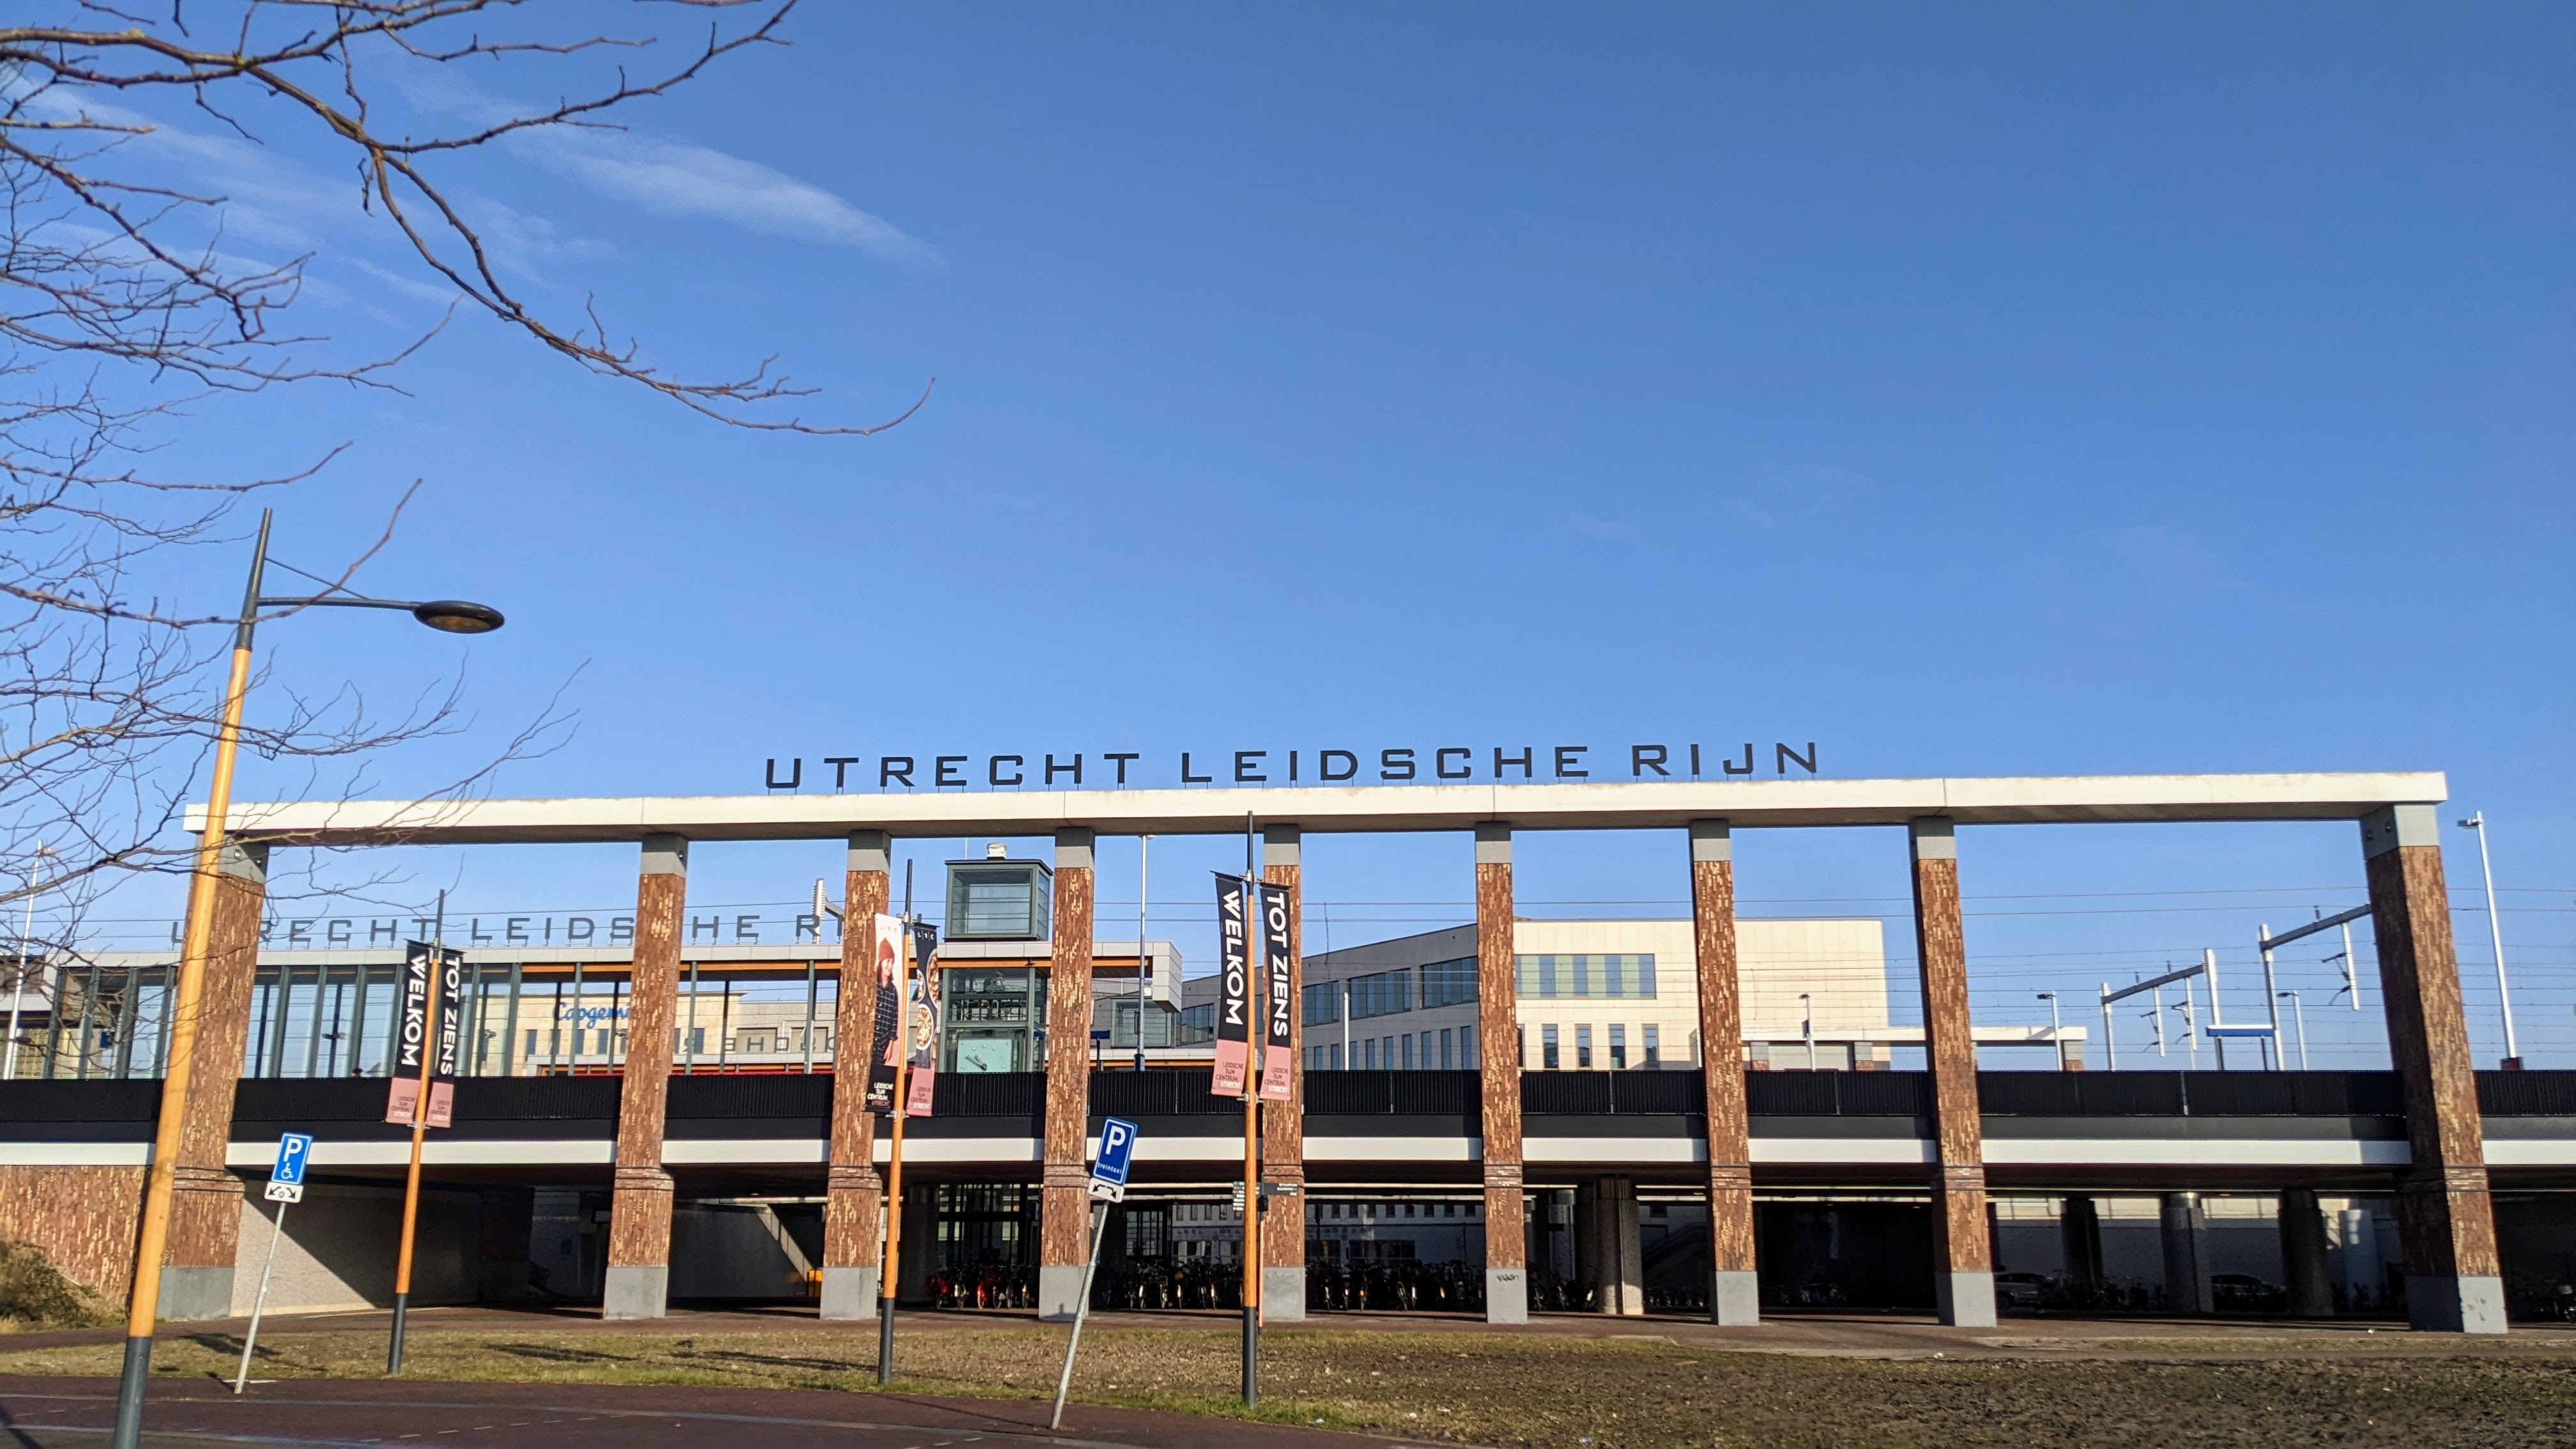 Utrecht Leidsche Rijn station